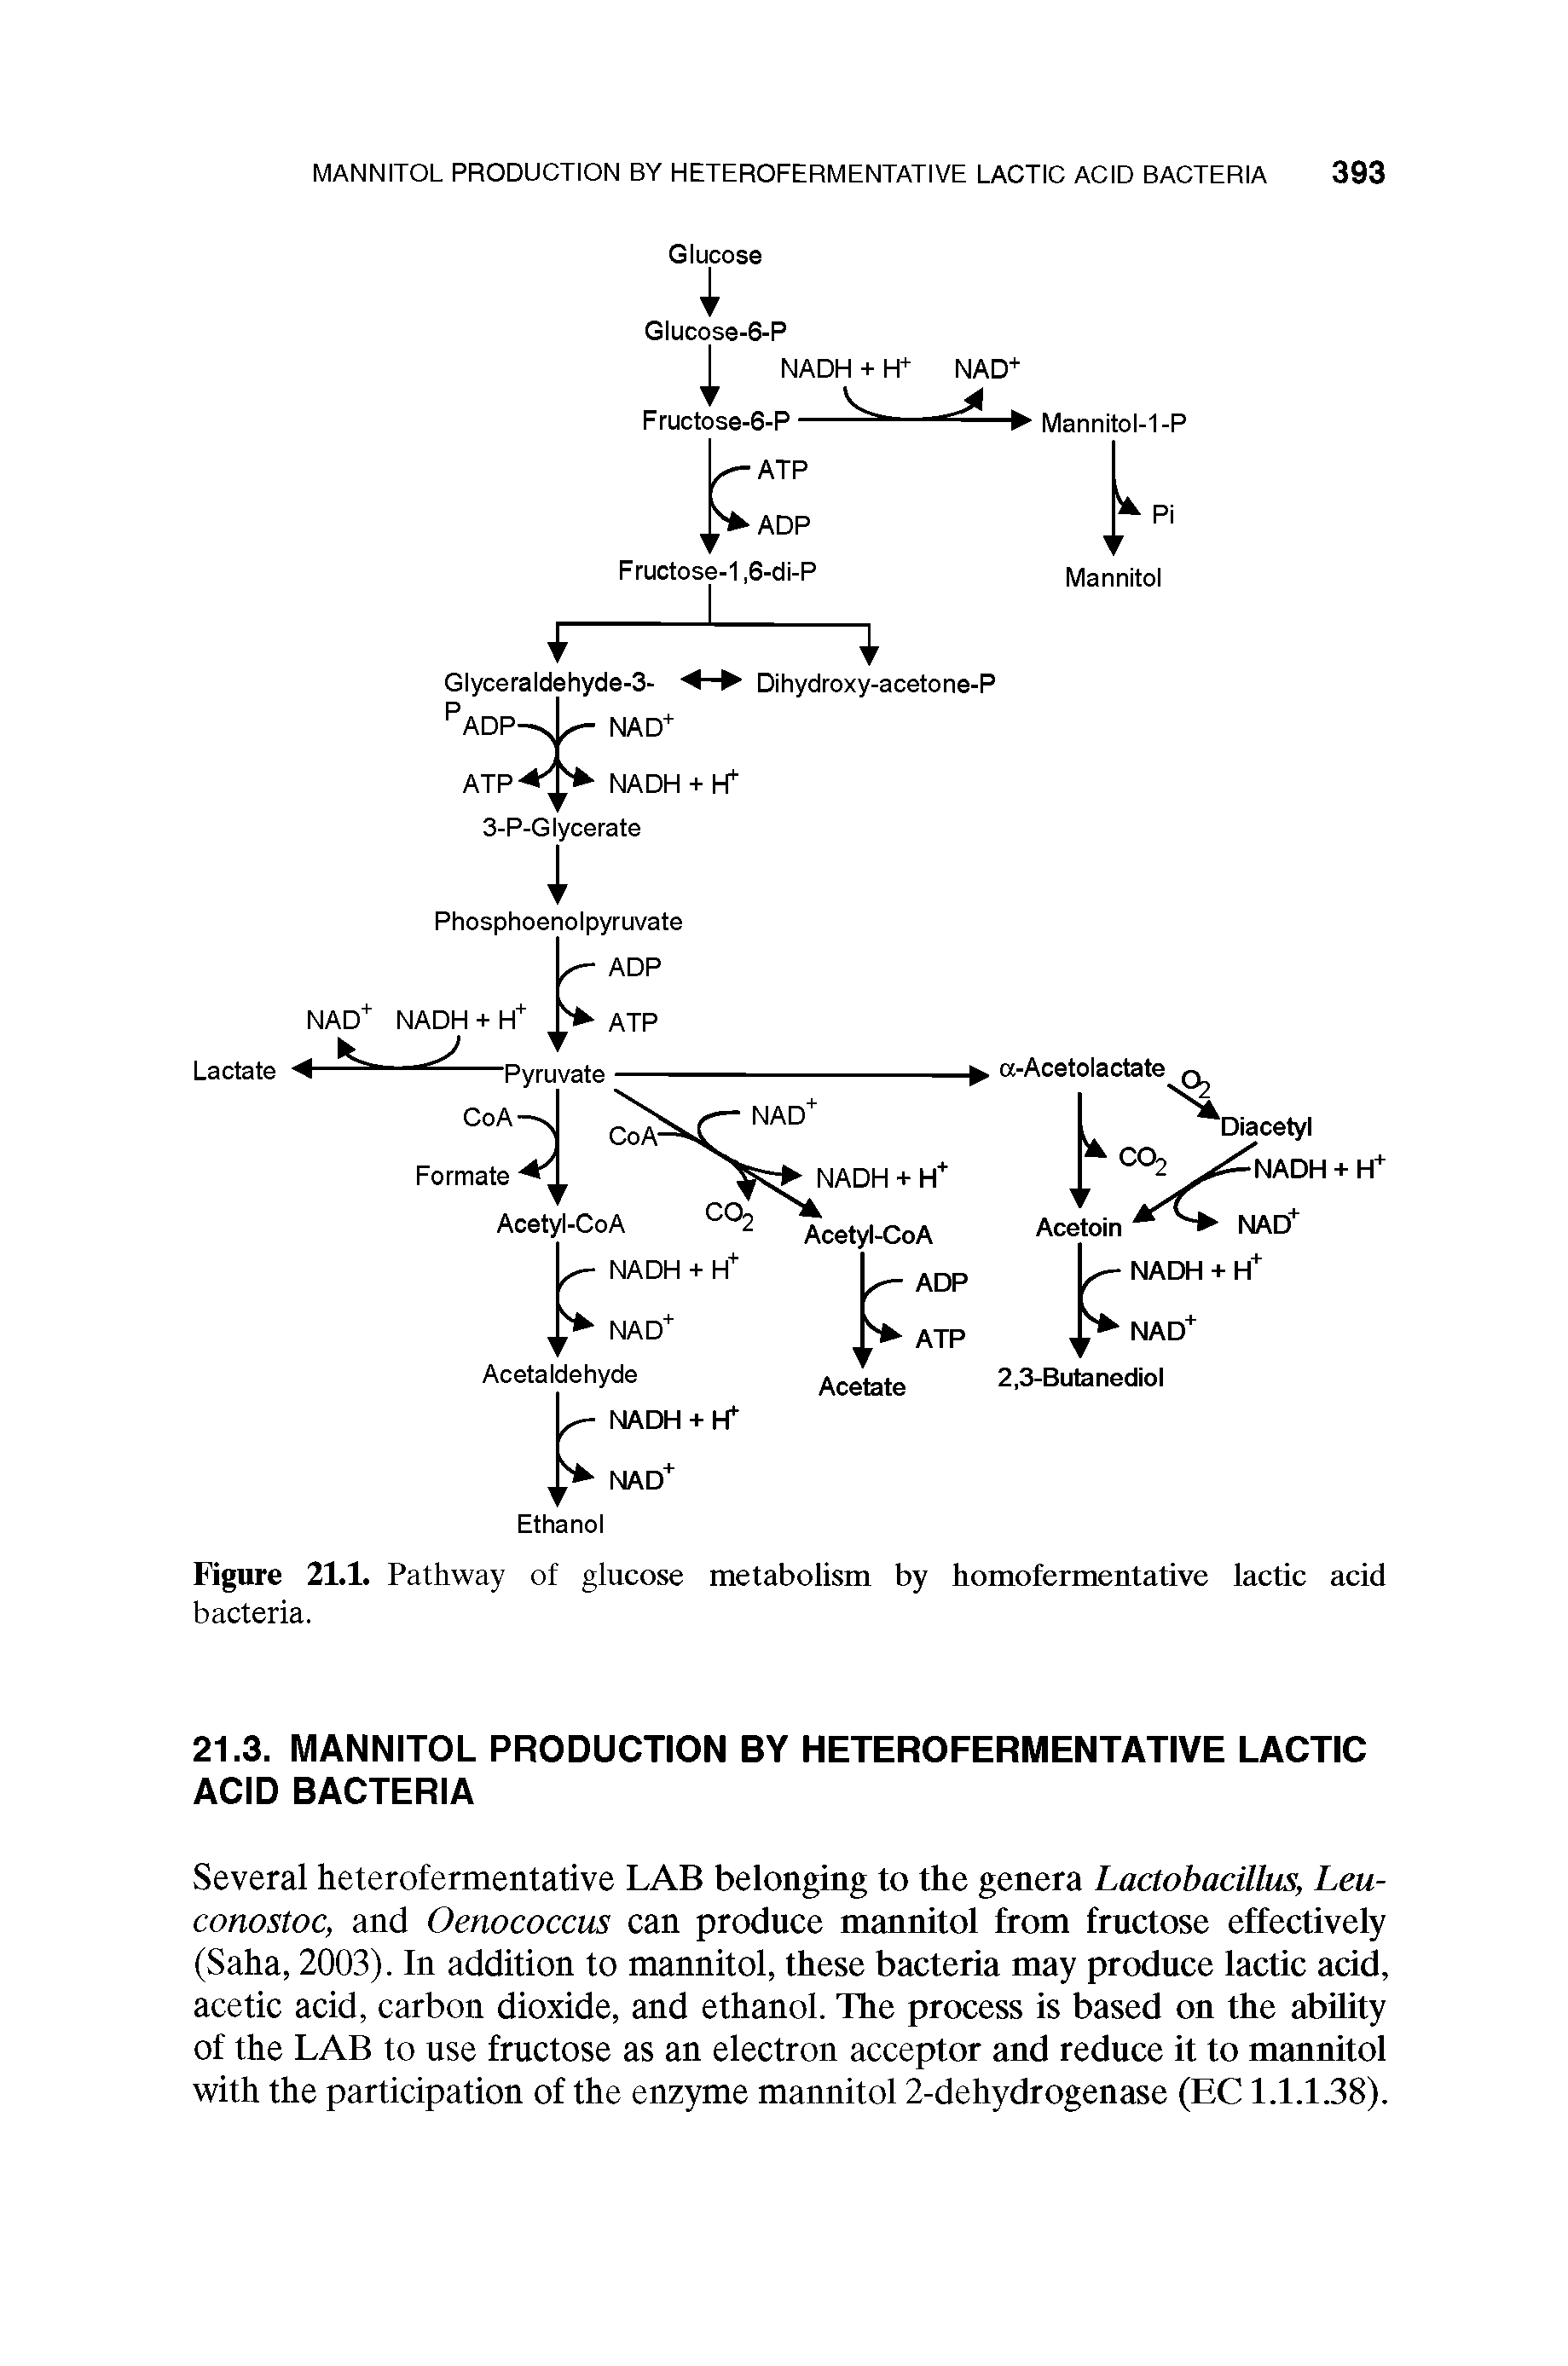 Figure 21.1. Pathway of glucose metabolism by homofermentative lactic acid bacteria.